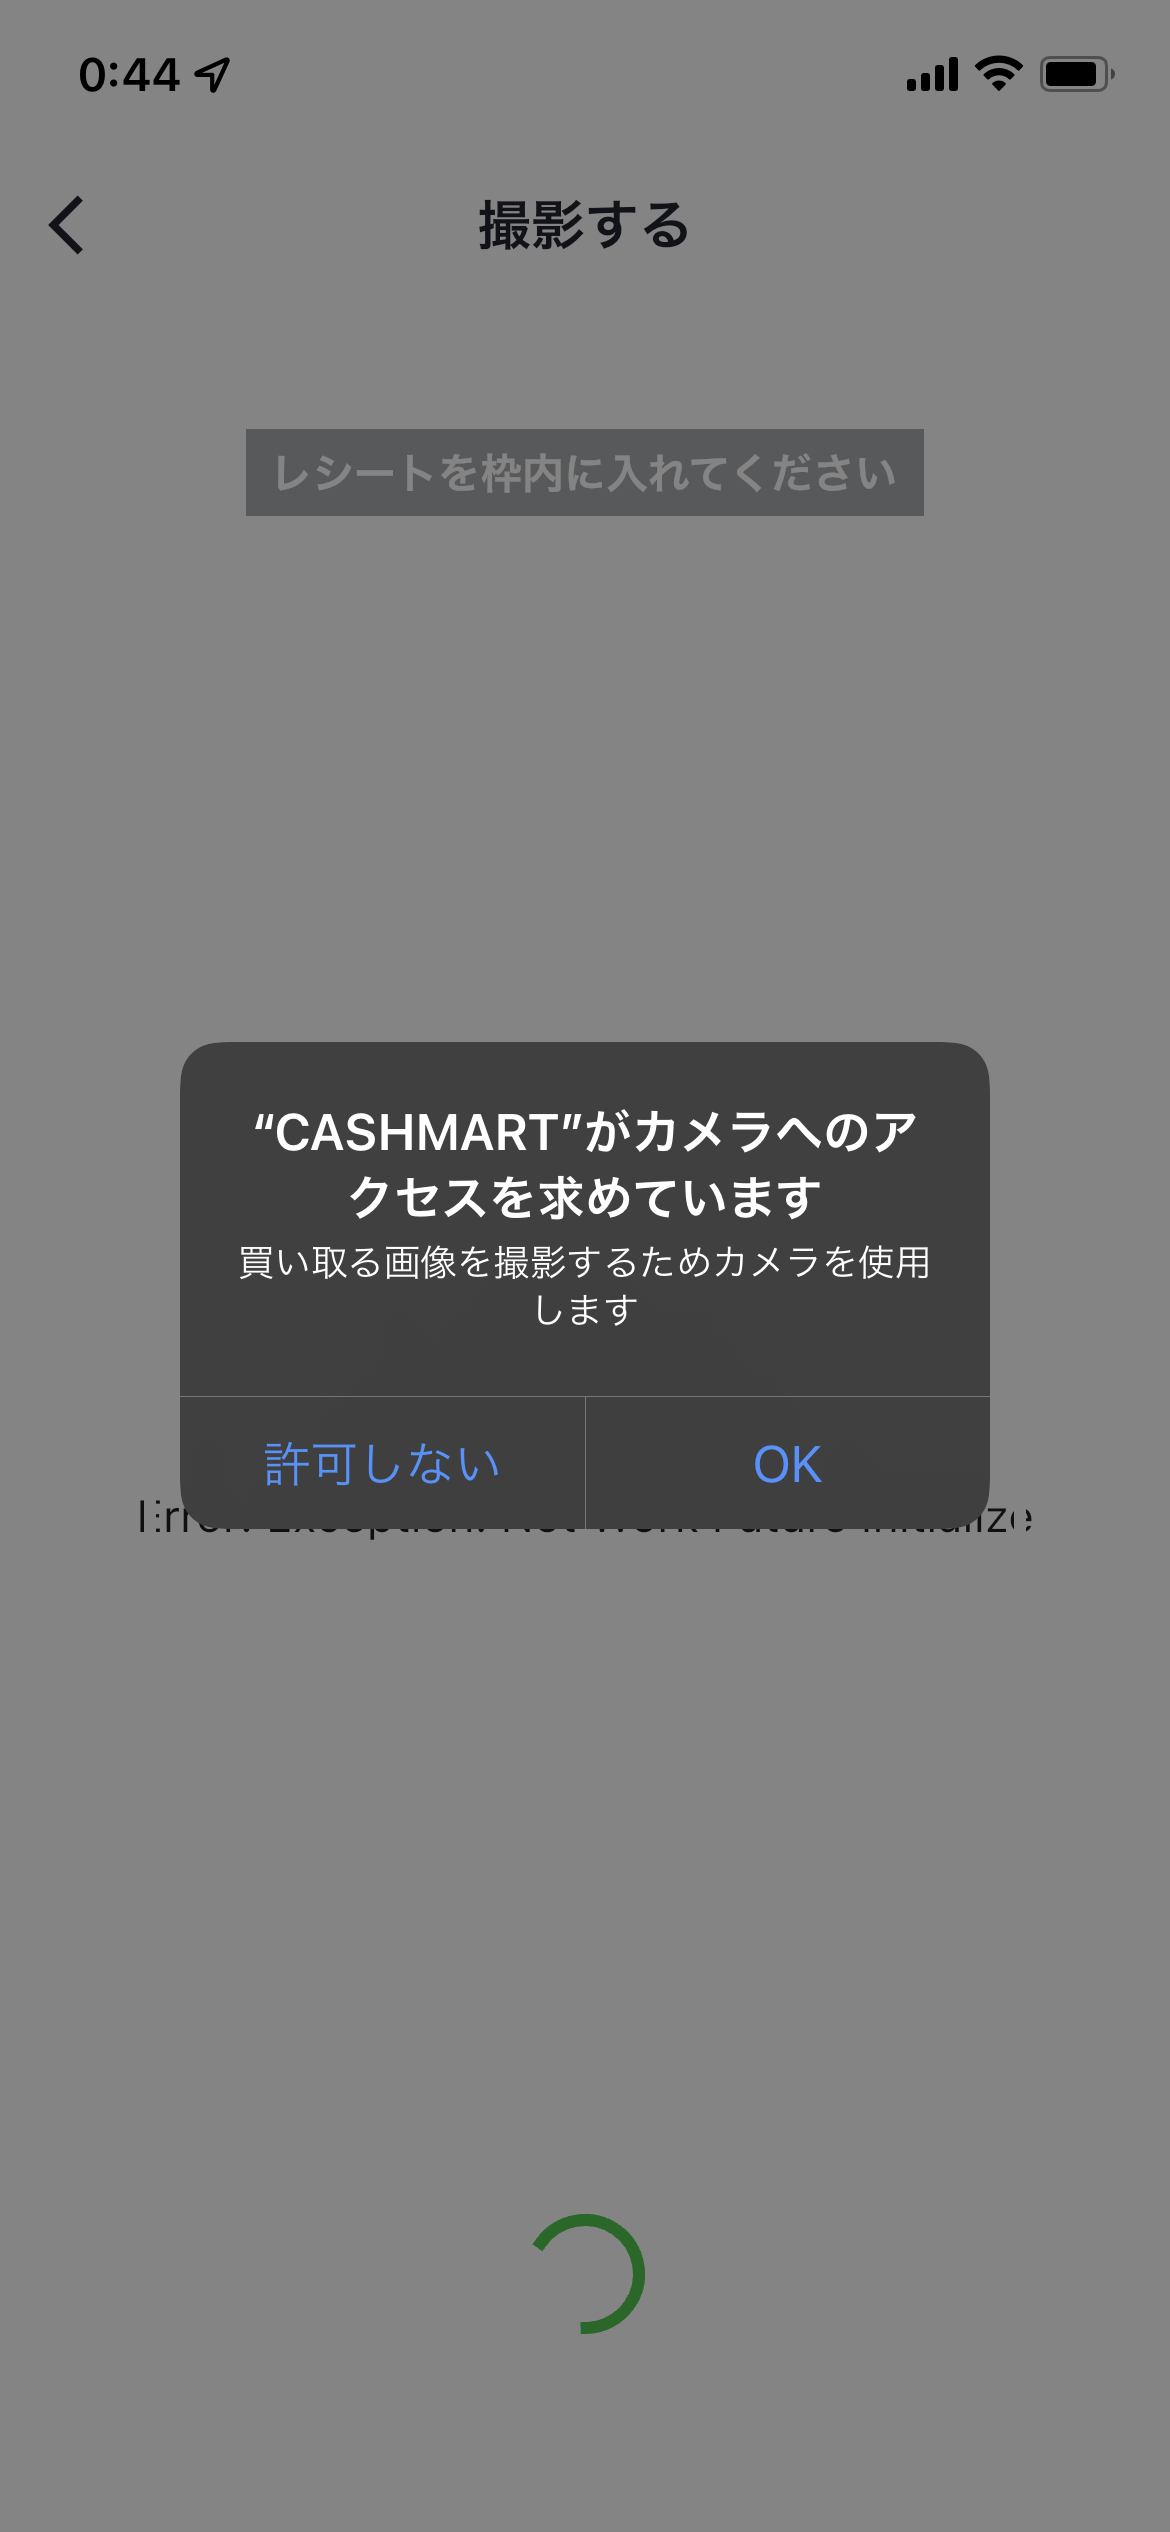 CASHMART ホーム screen